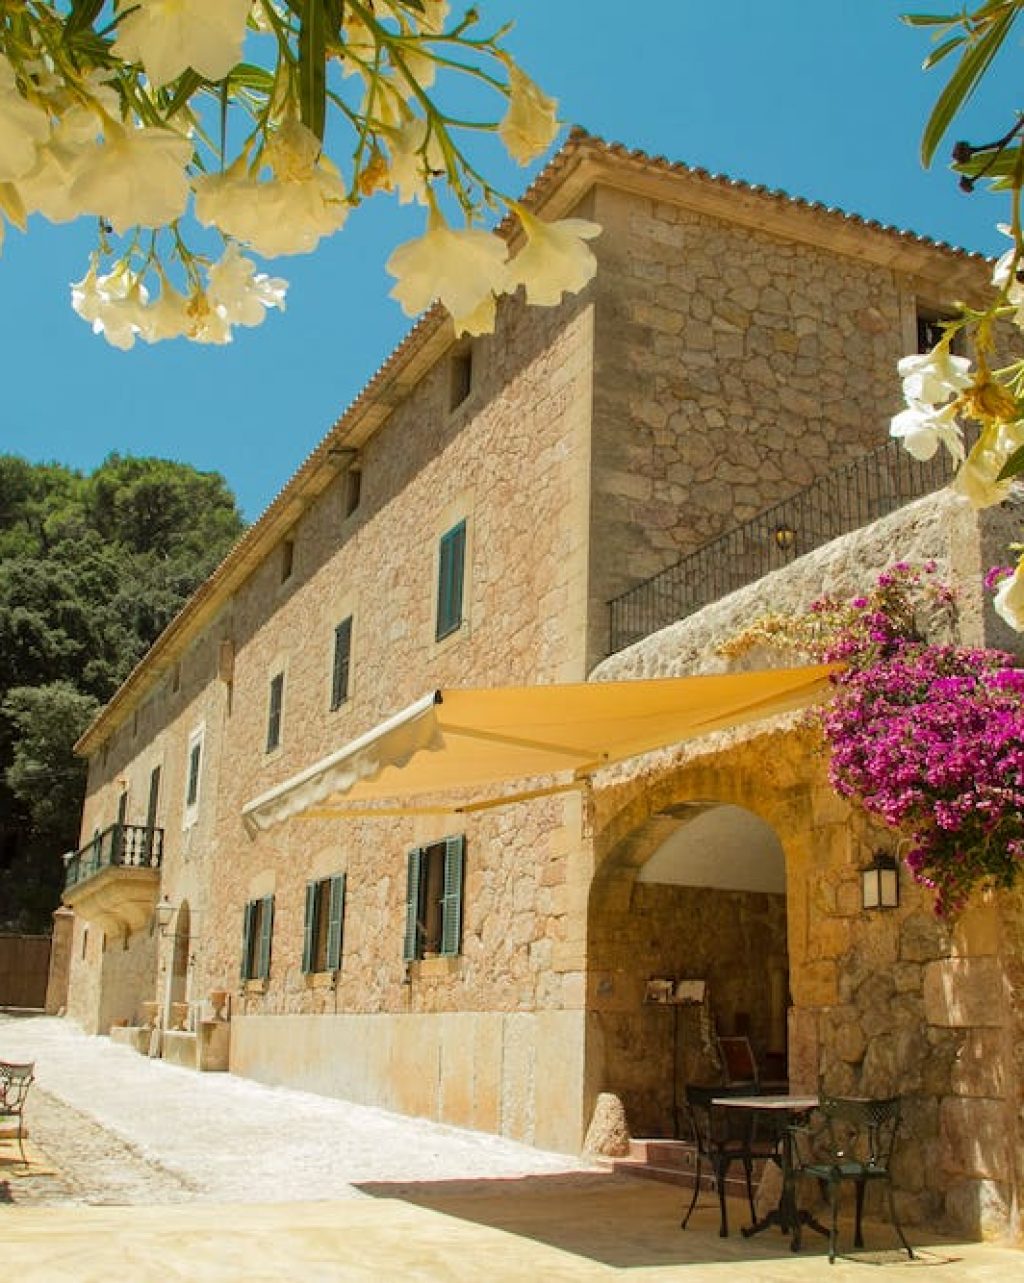 Superb wedding location in Mallorca